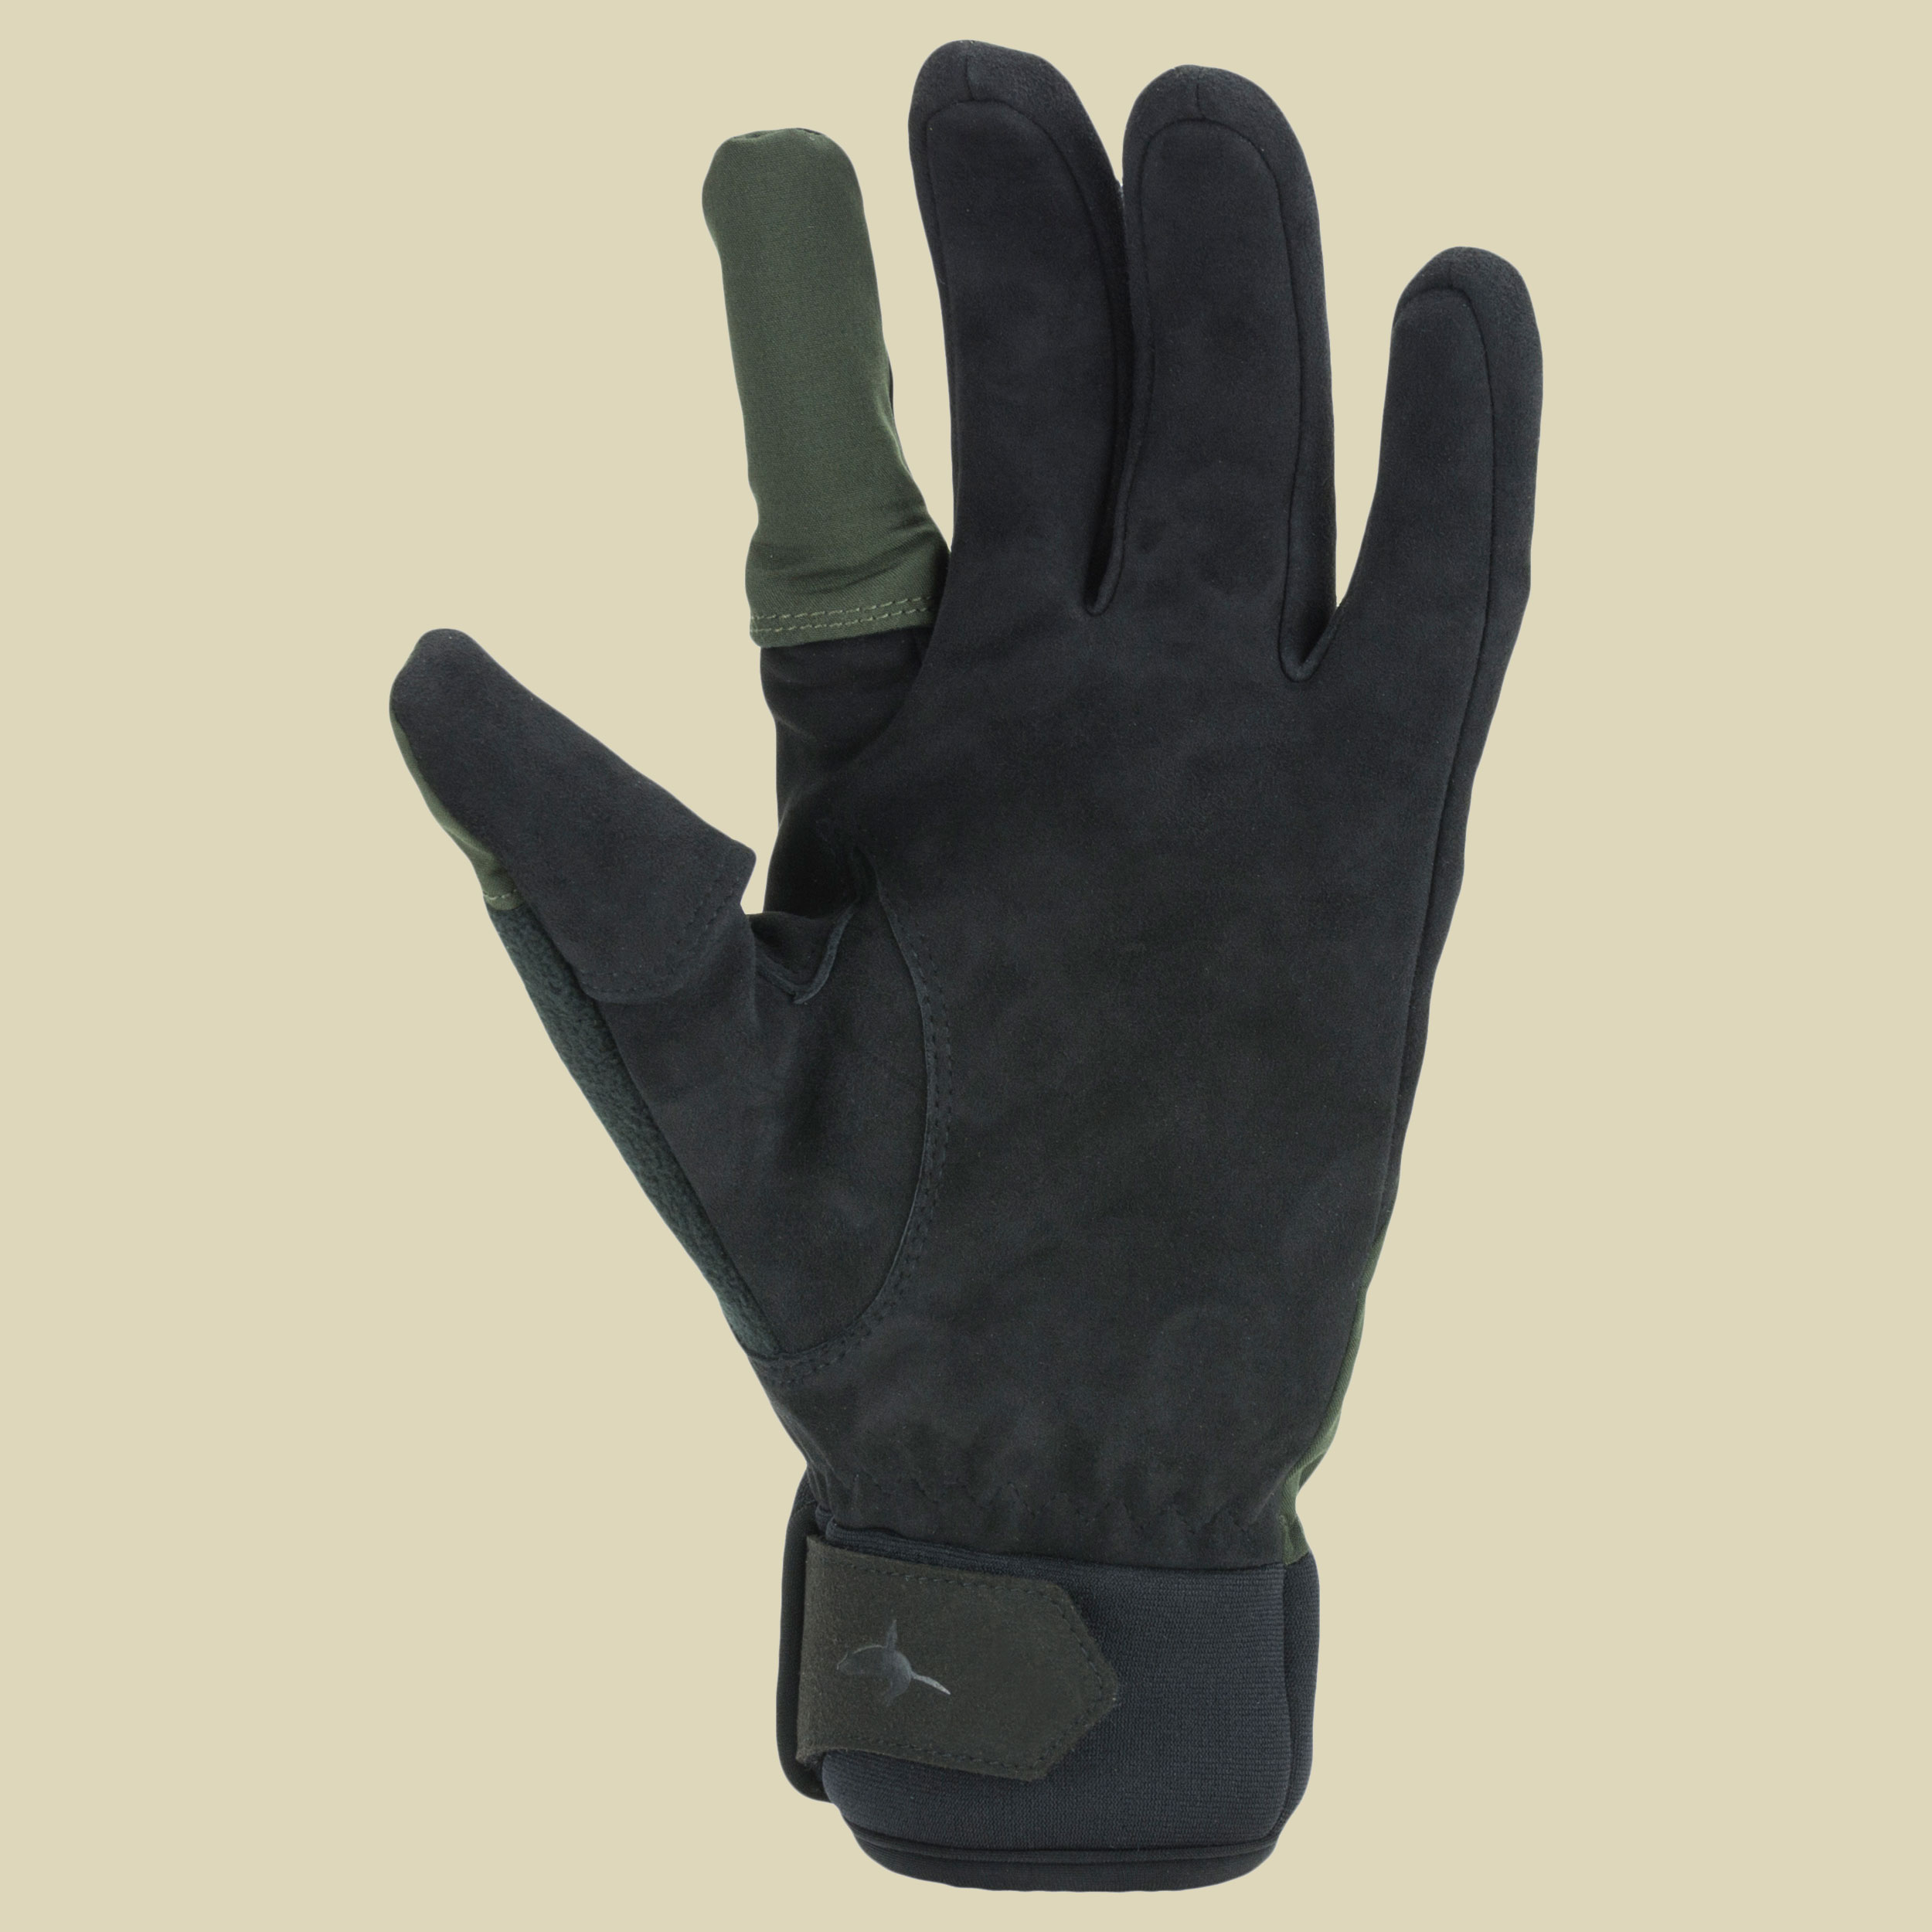 Waterproof All Weather Sporting Glove Größe XXL Farbe olive green/black